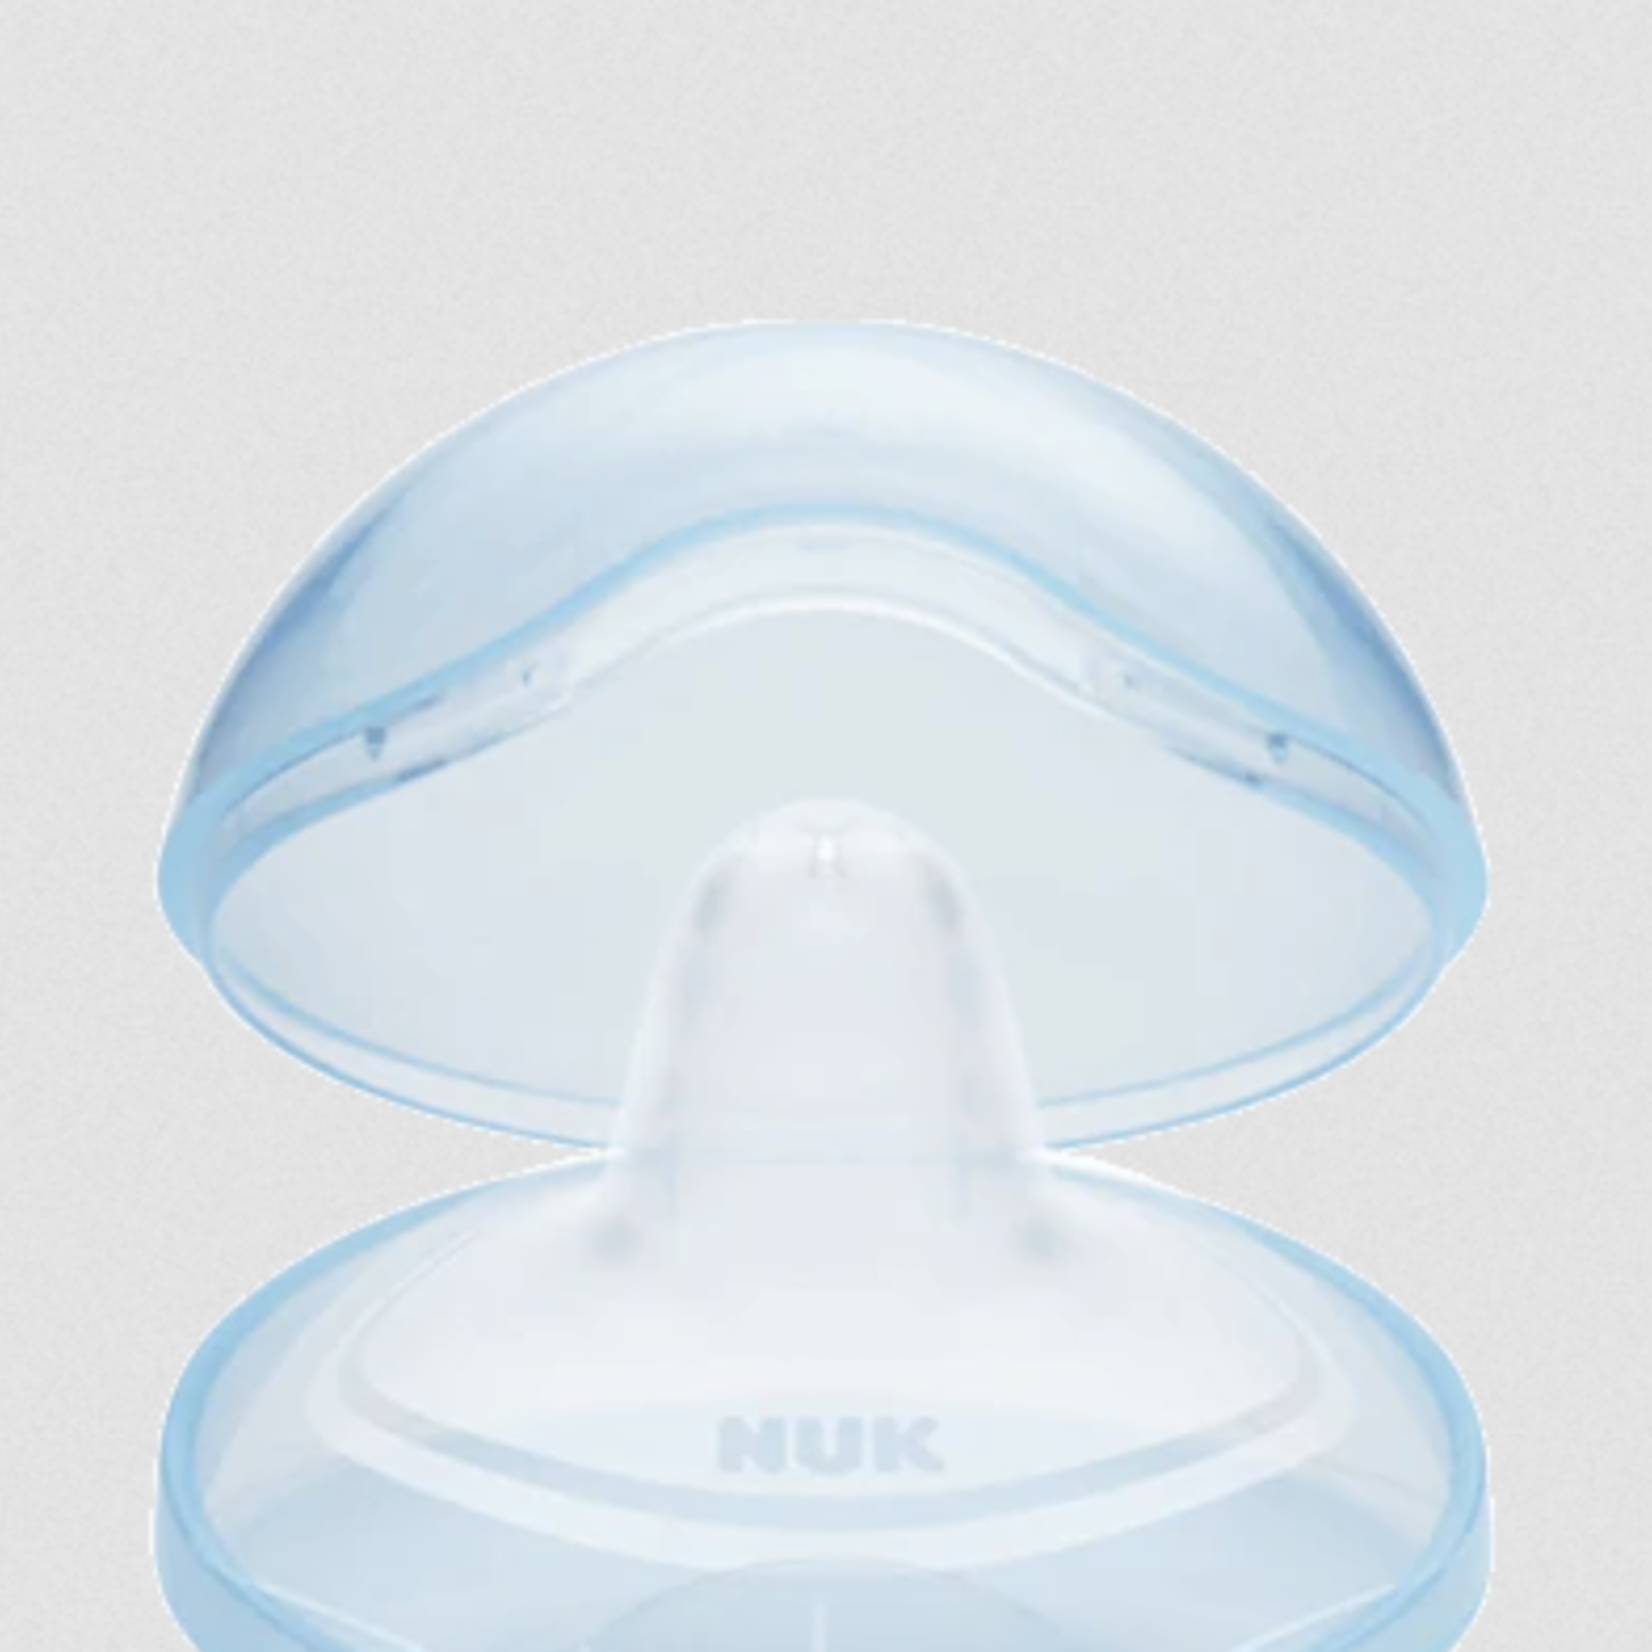 NUK Silicone Nipple Shield with Box, Medium, 2 per pack